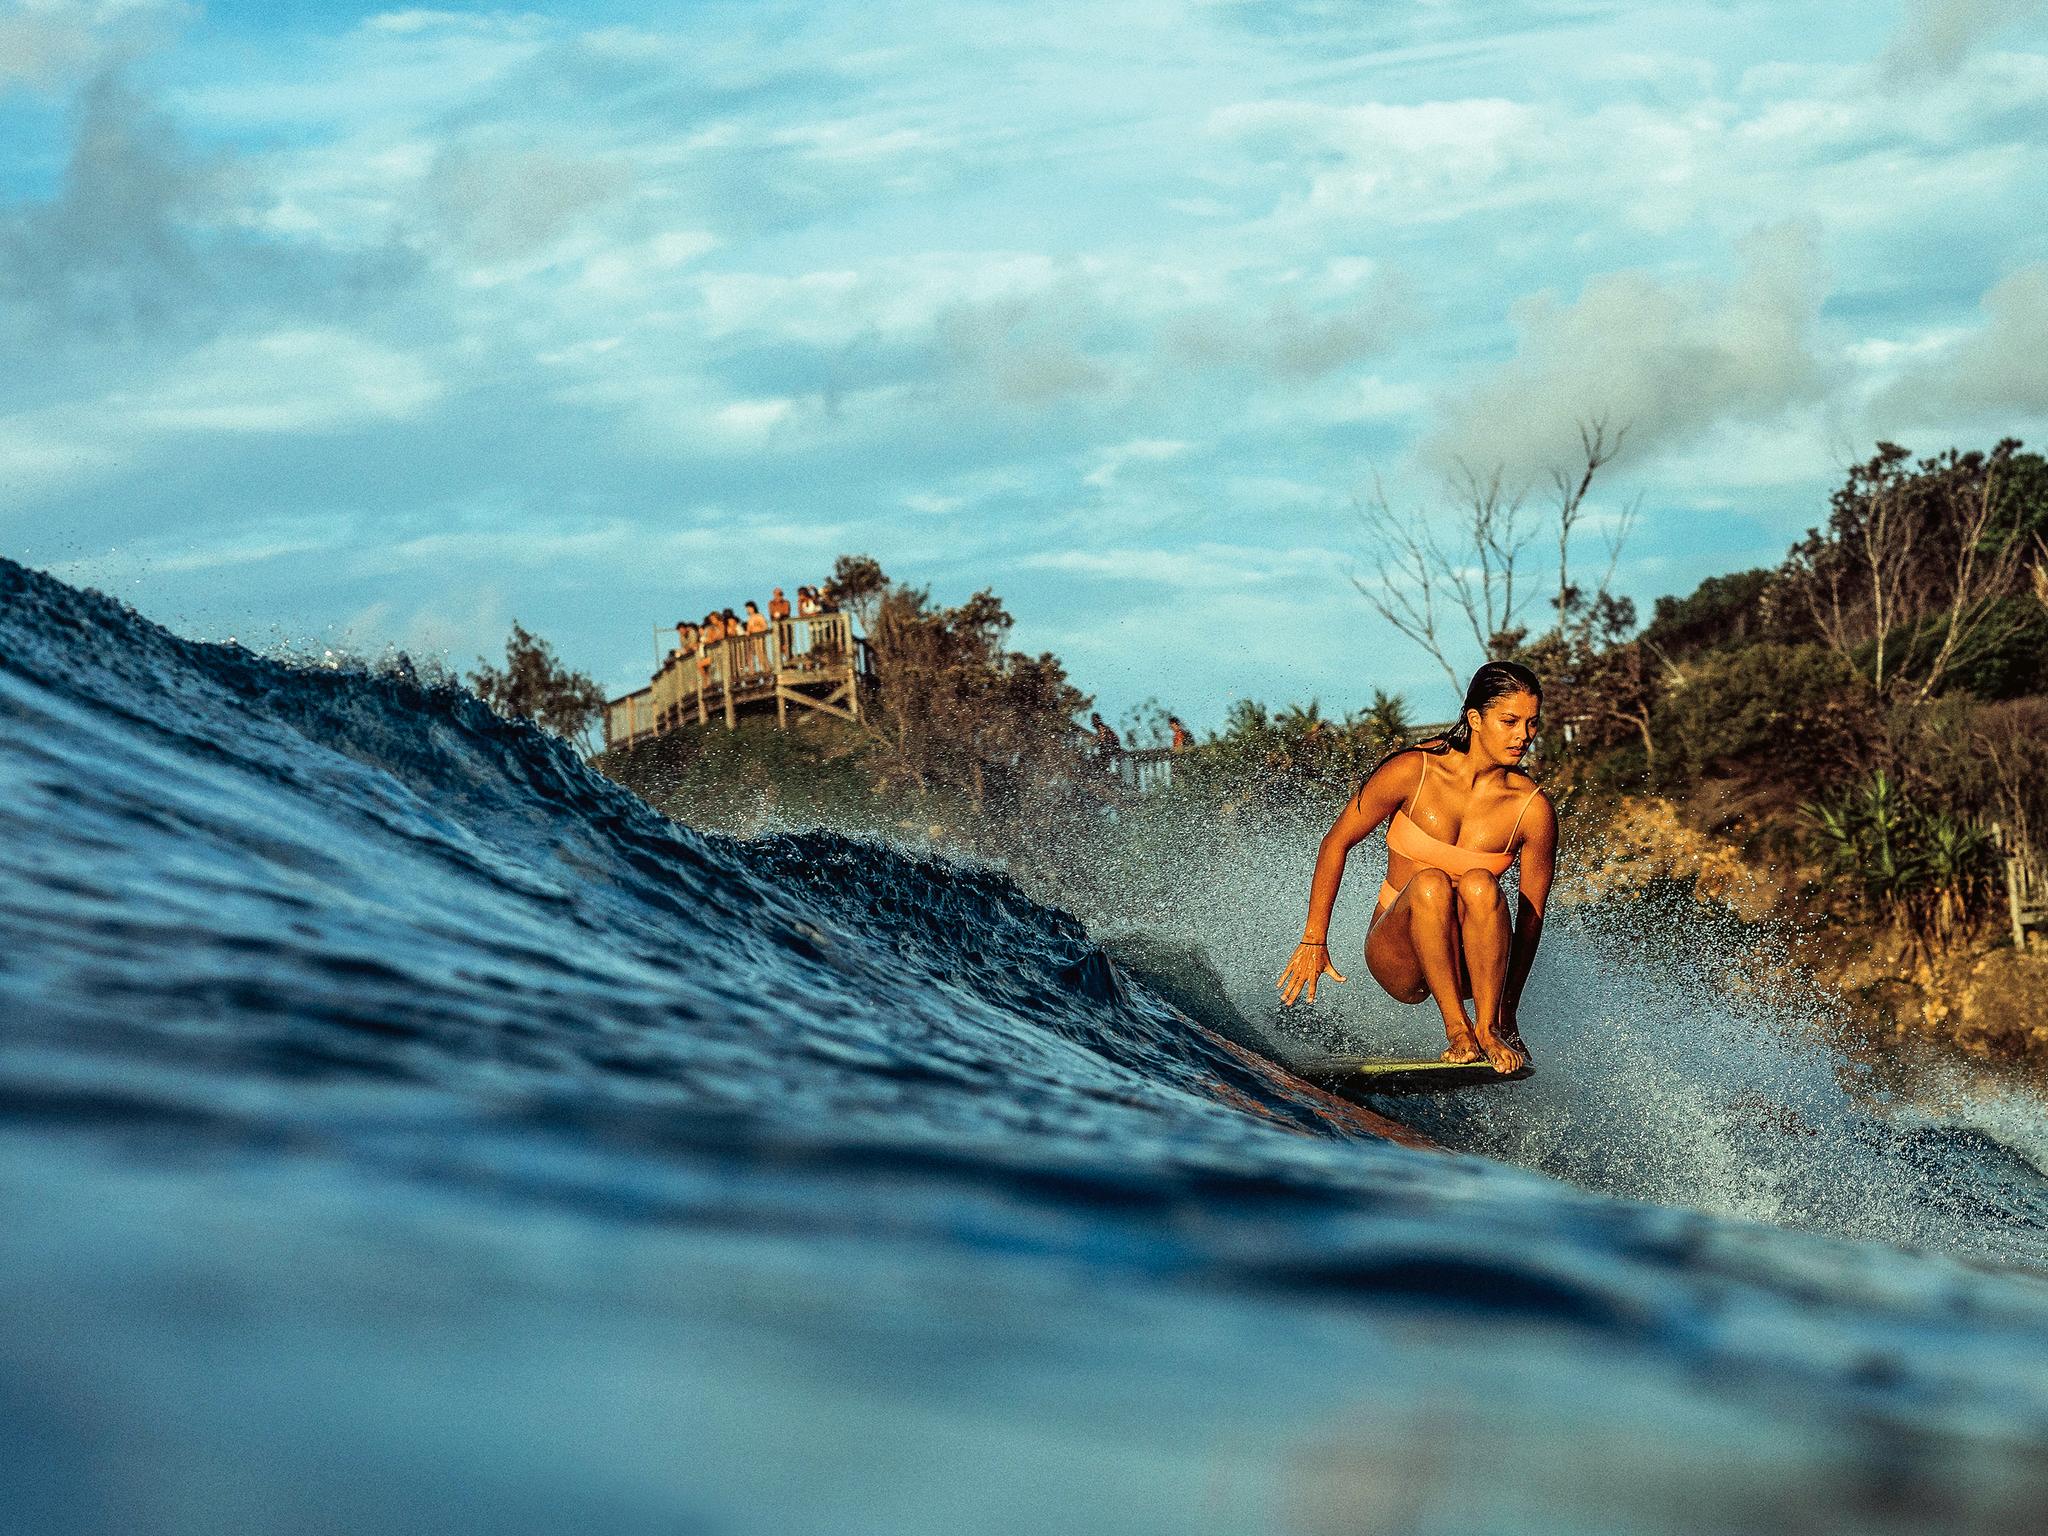 New wave of Hawaiian surfers look to reclaim sport's cultural spirit - ABC  News